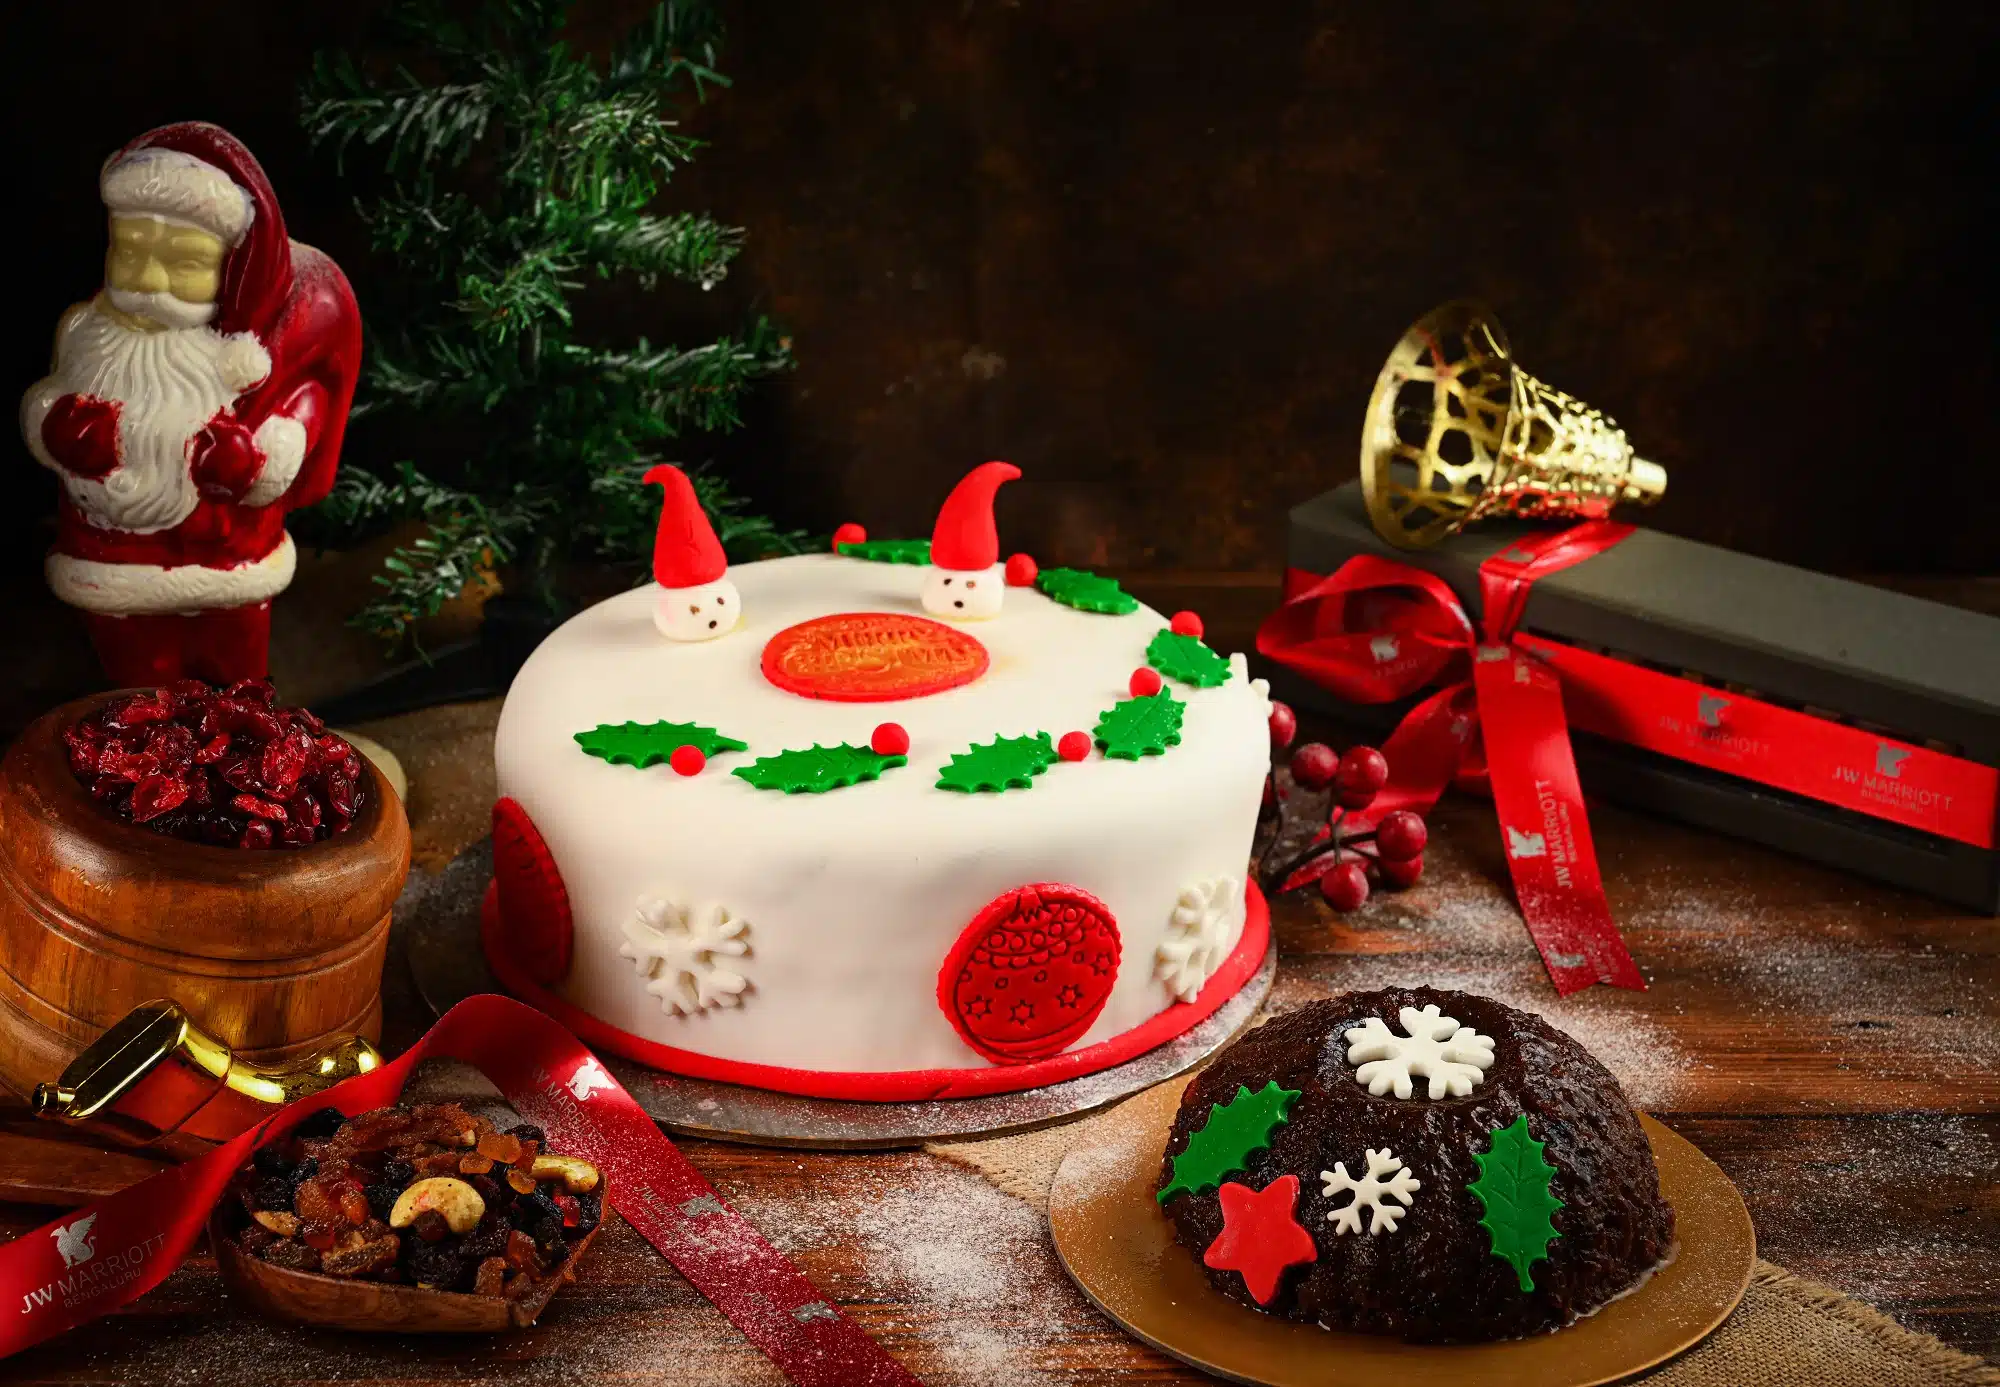 Exciting Christmas Eve Cake Decorating Inspiration!